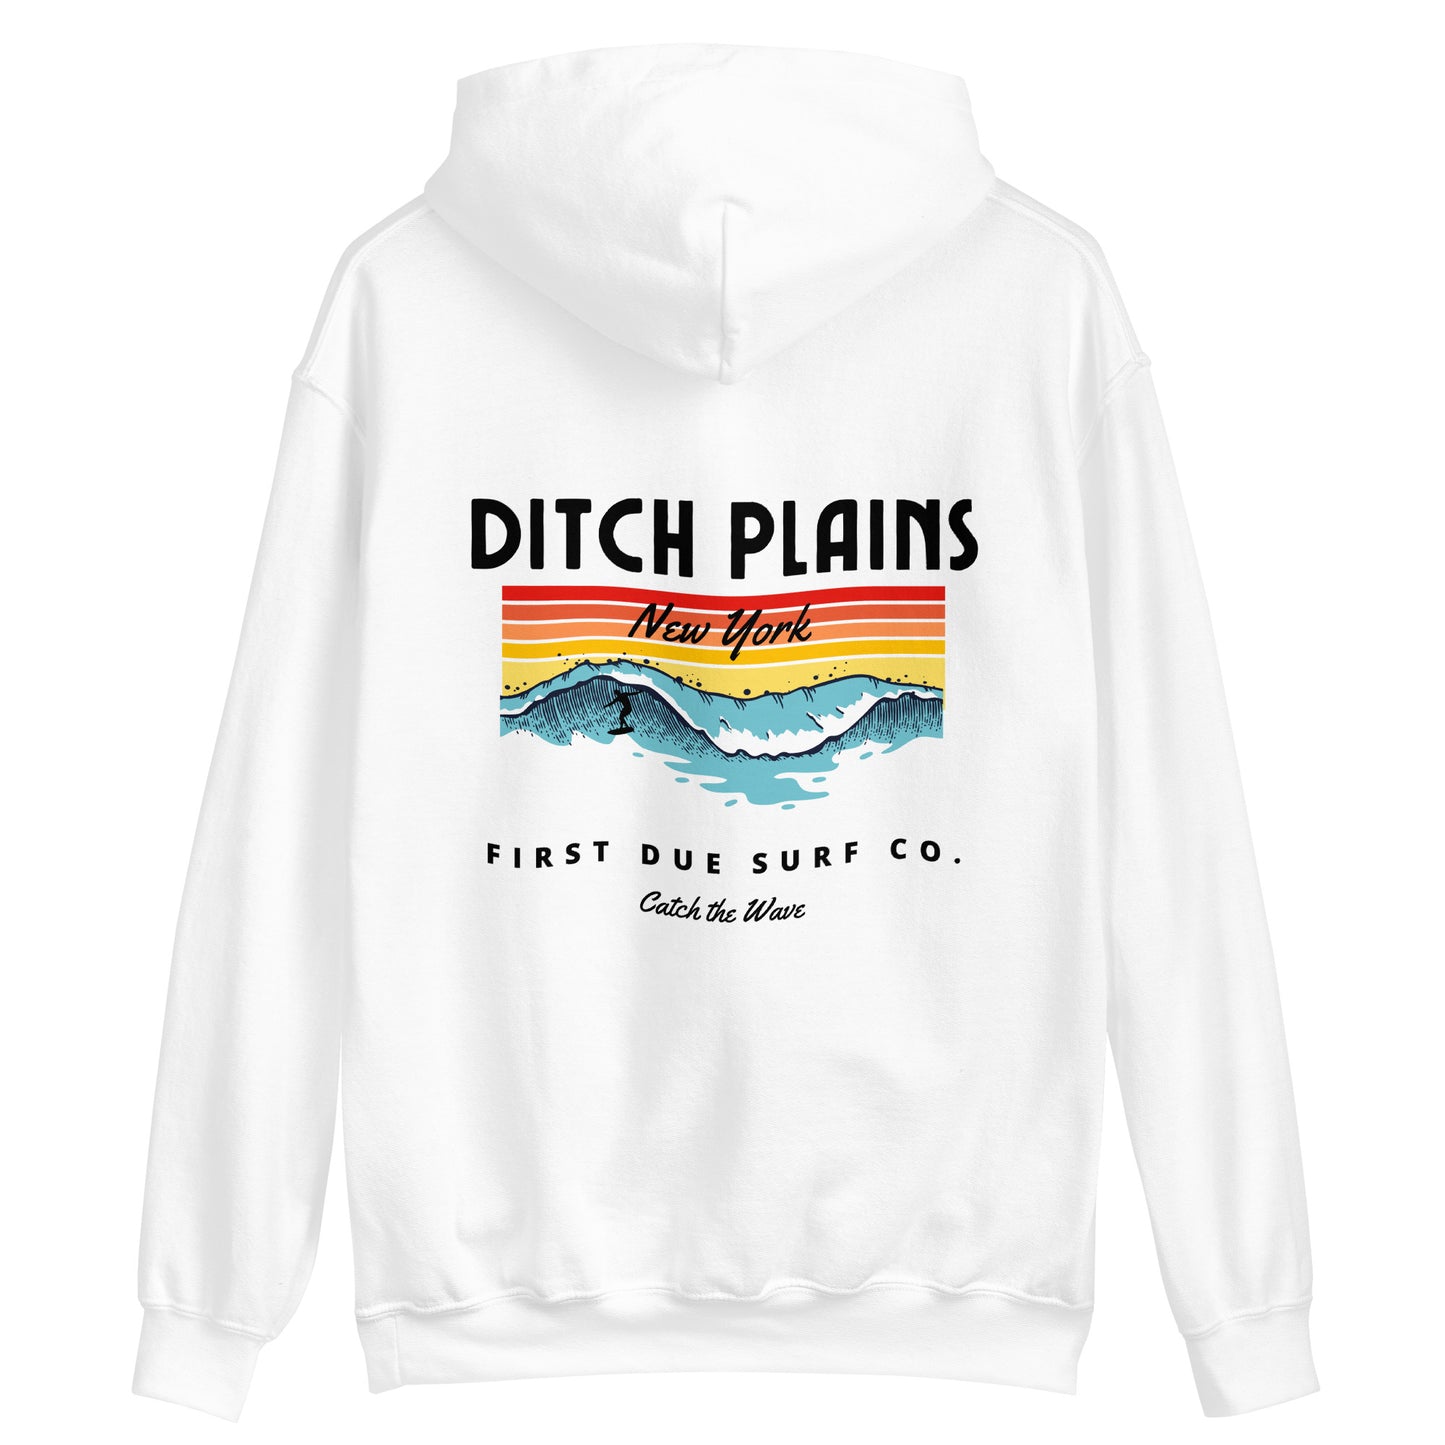 Ditch Plains Hoodie - Montauk, NY Surf